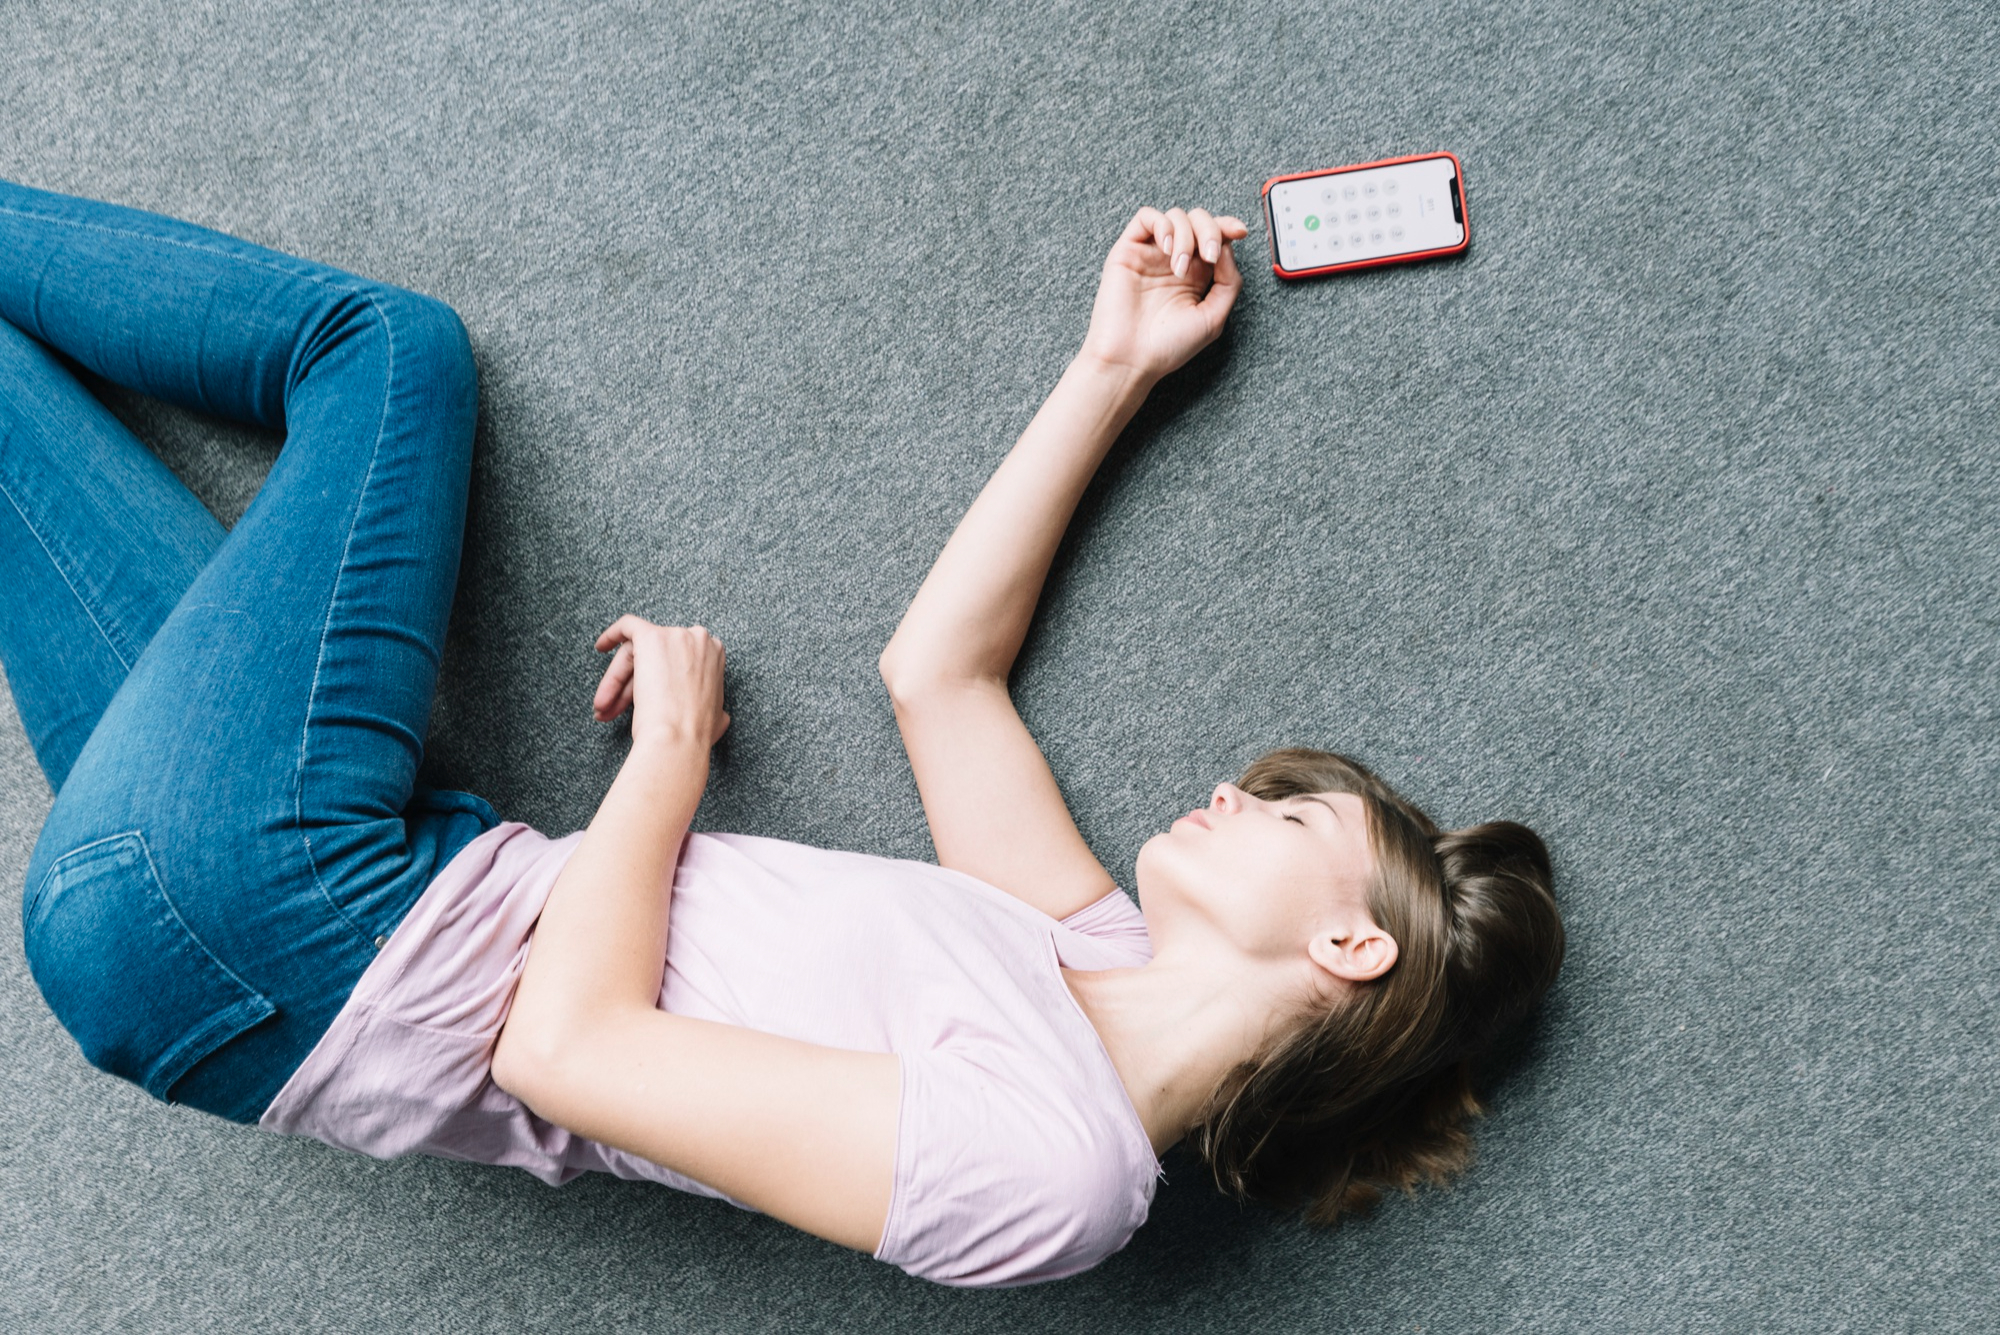 An unconscious woman laying next to a phone | Source: Freepik